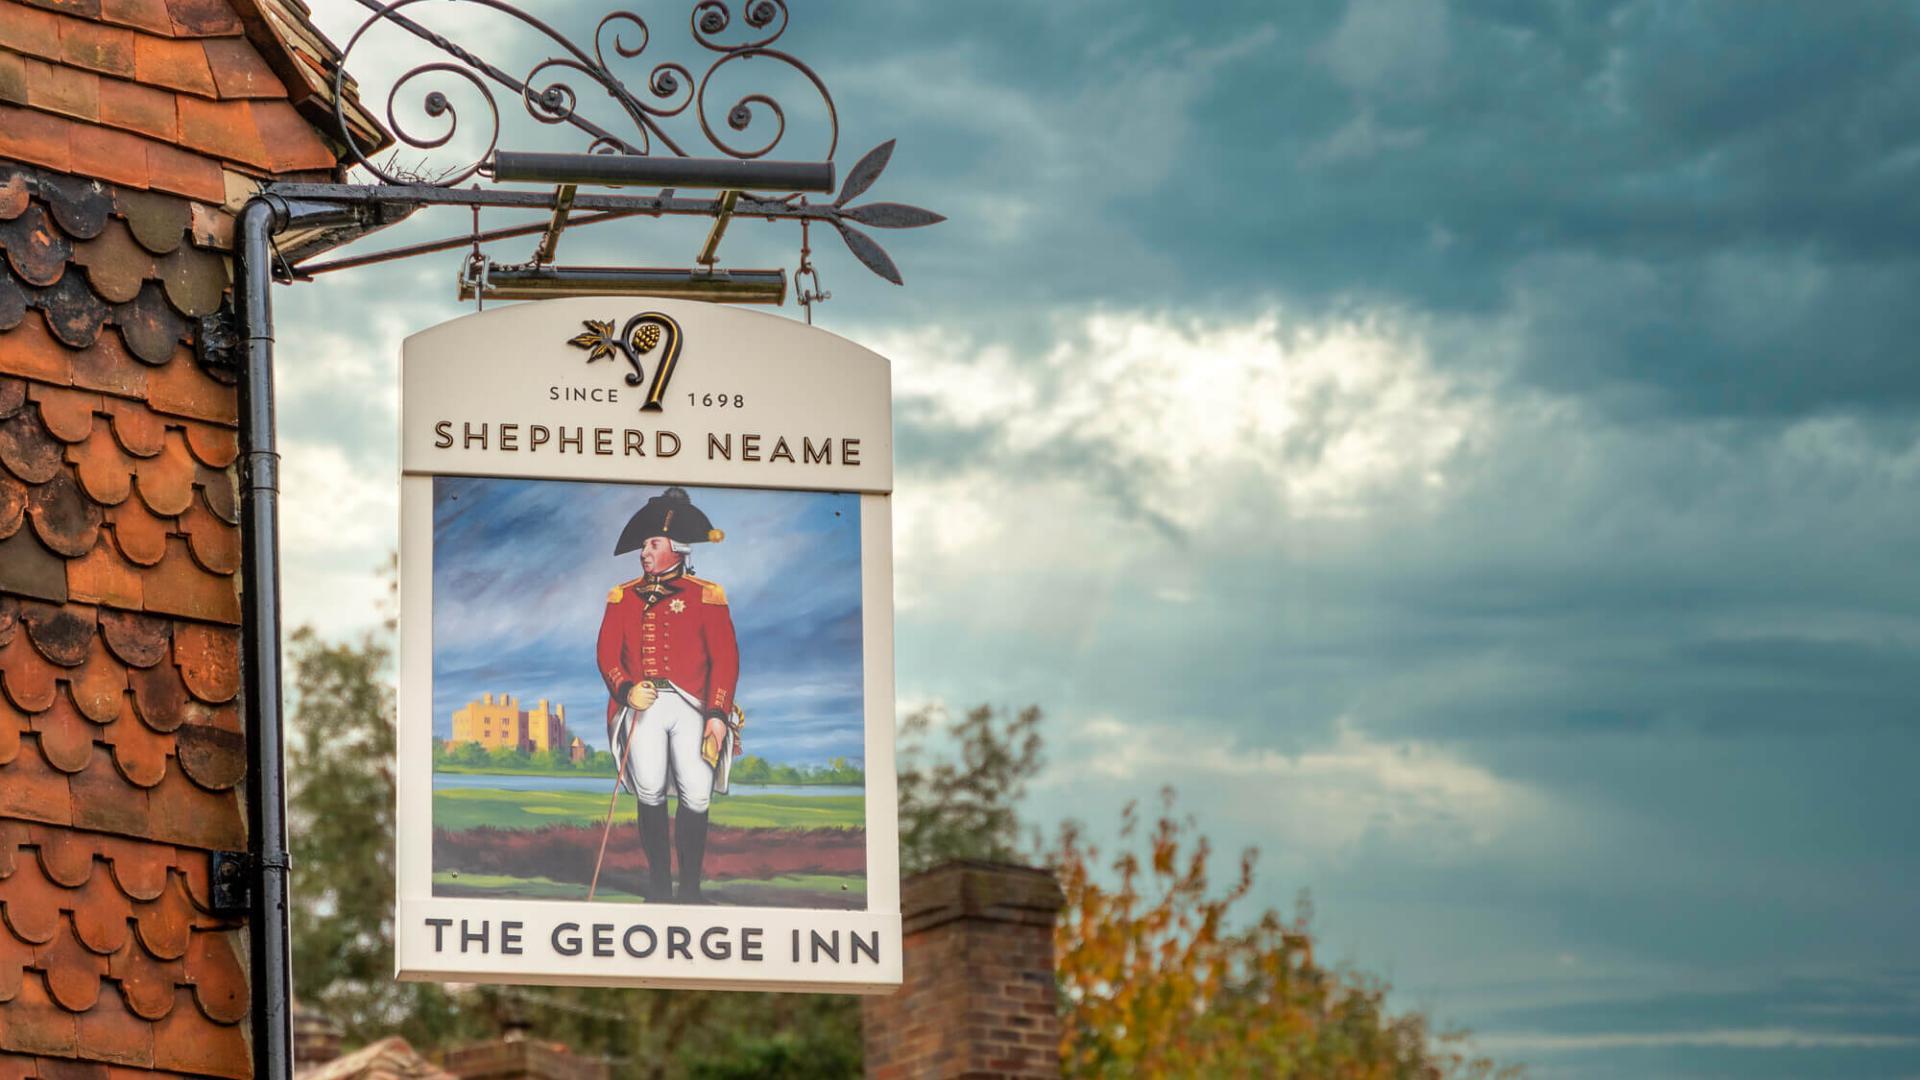 The George Inn, Leeds, Maidstone, Shepherd Neame